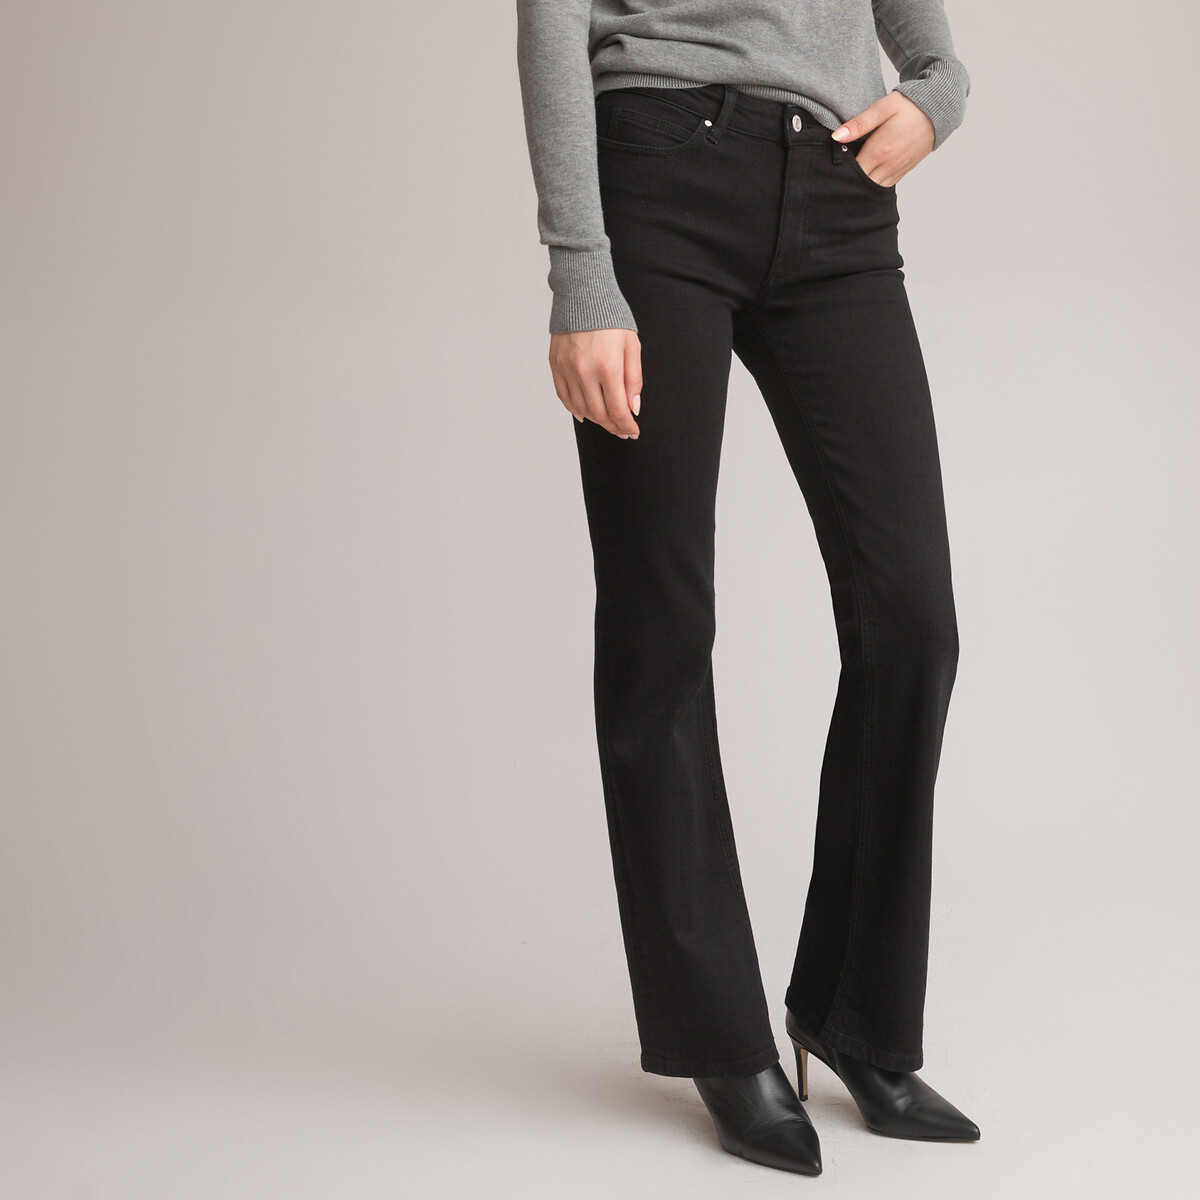 Джинсы буткат 50 (FR) - 56 (RUS) черный джинсы буткат для периода беременности 44 fr 50 rus черный